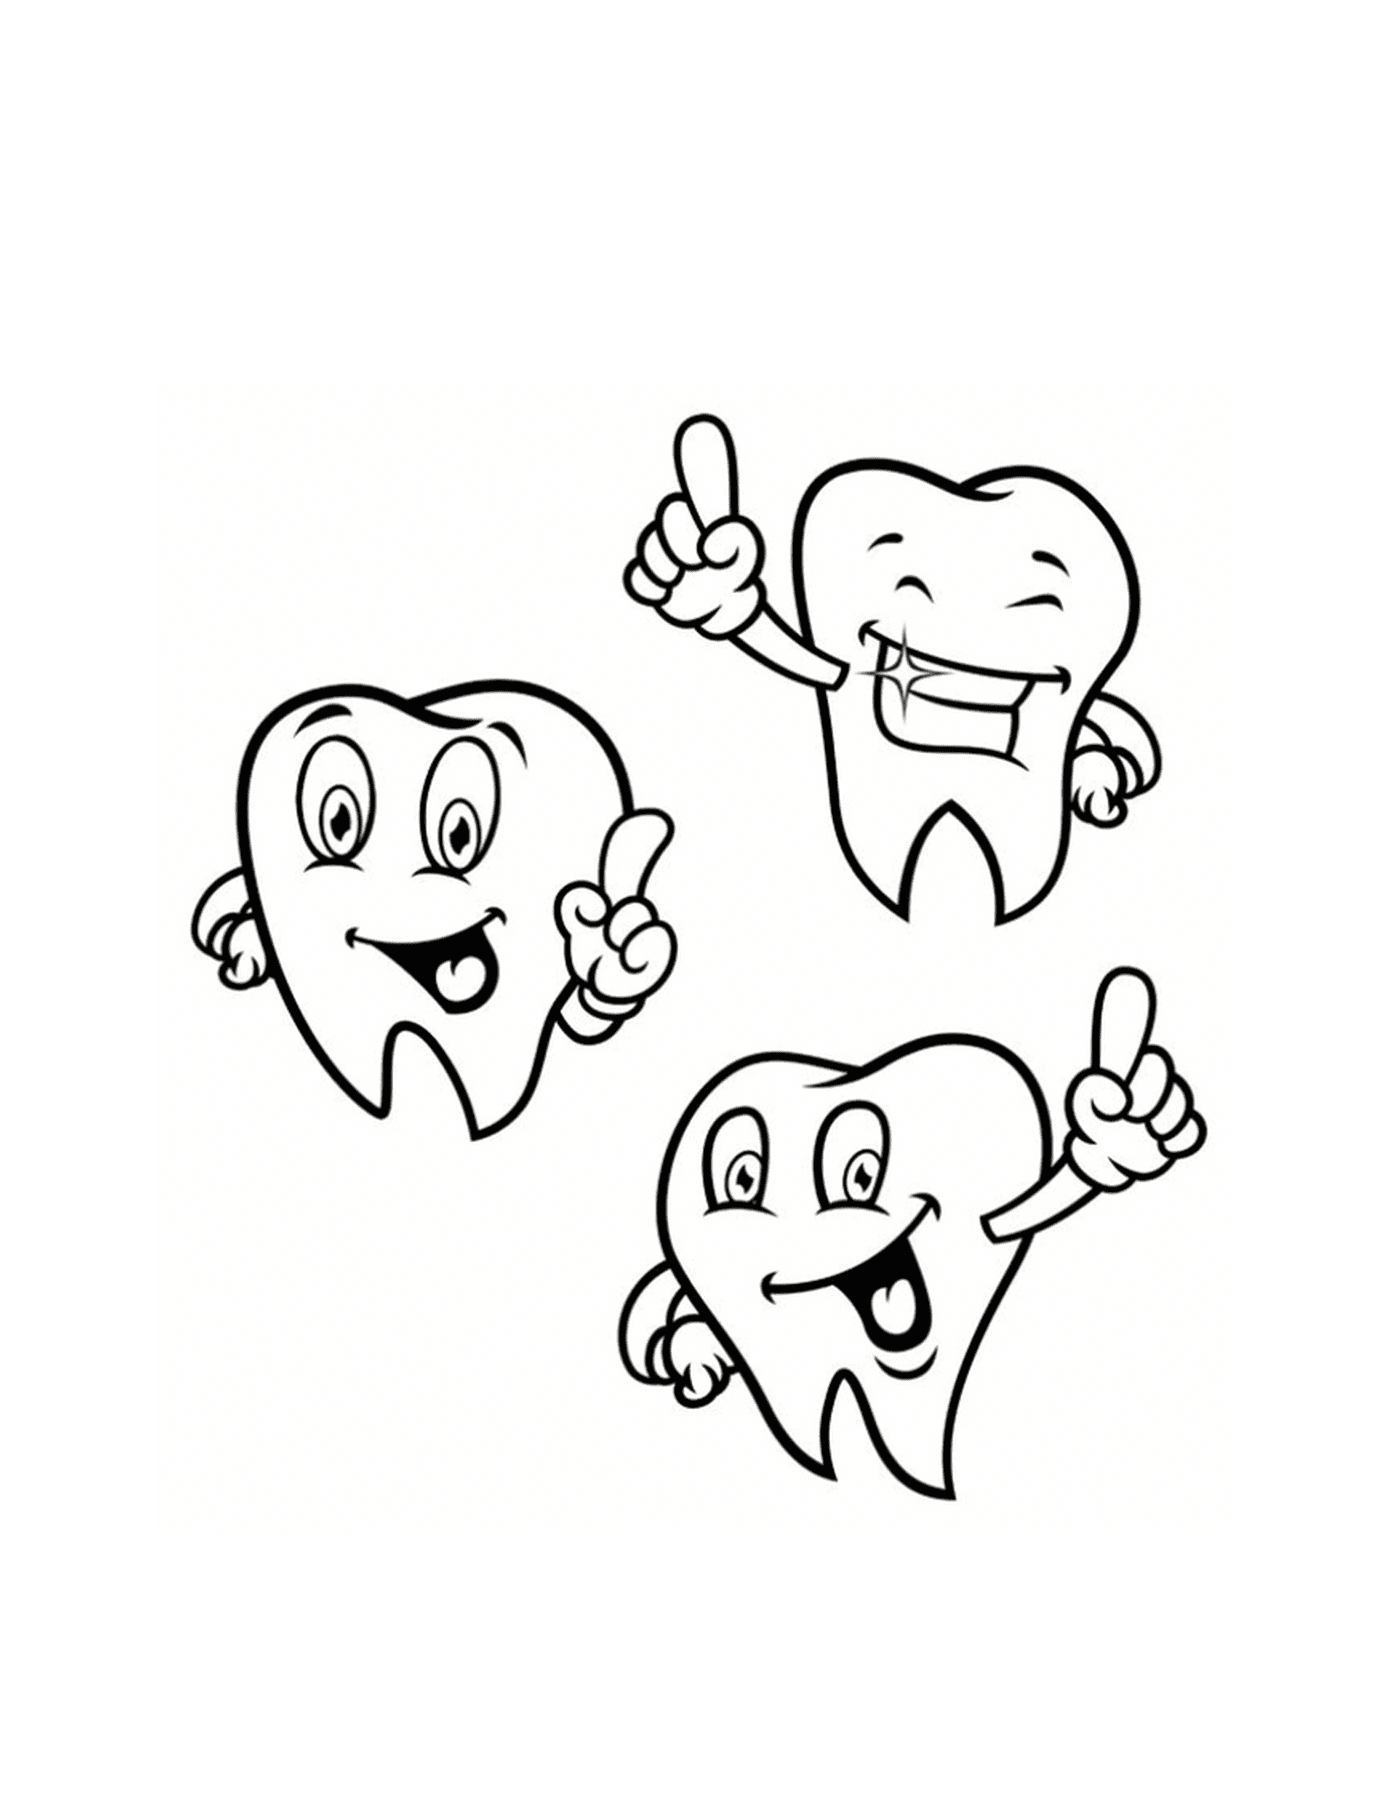  Three lovely teeth with a raised thumb 